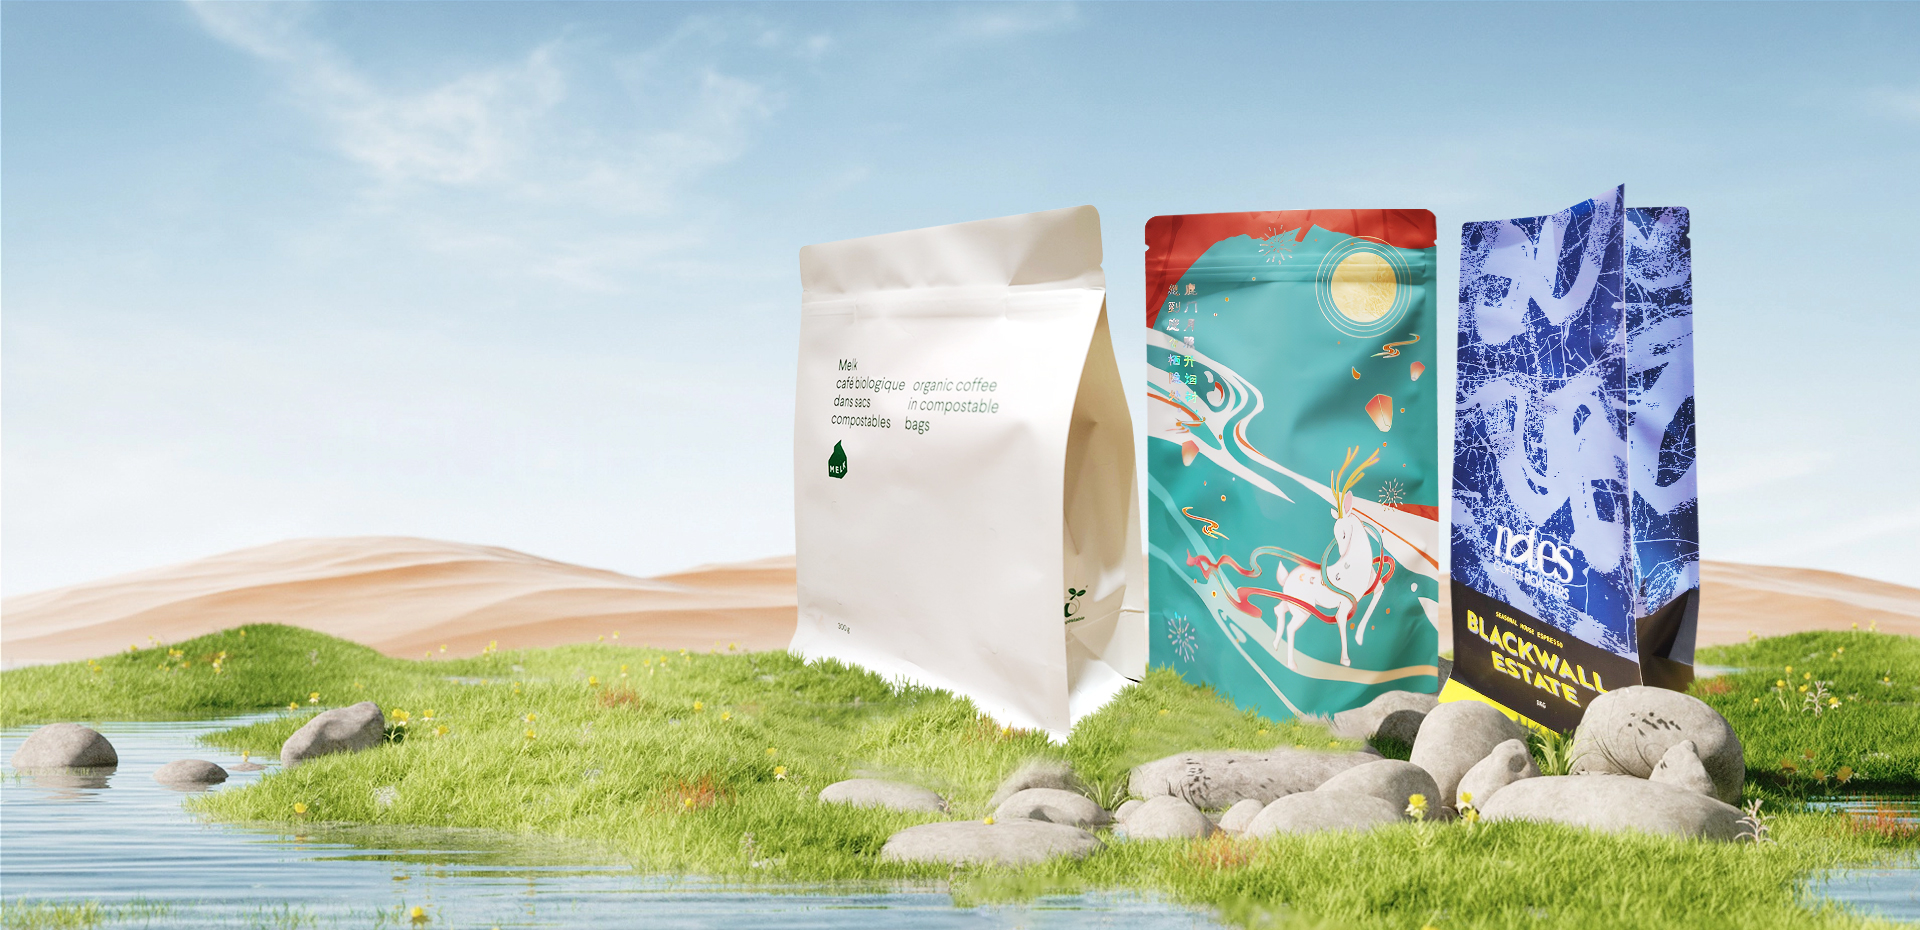 Maixin Packaging